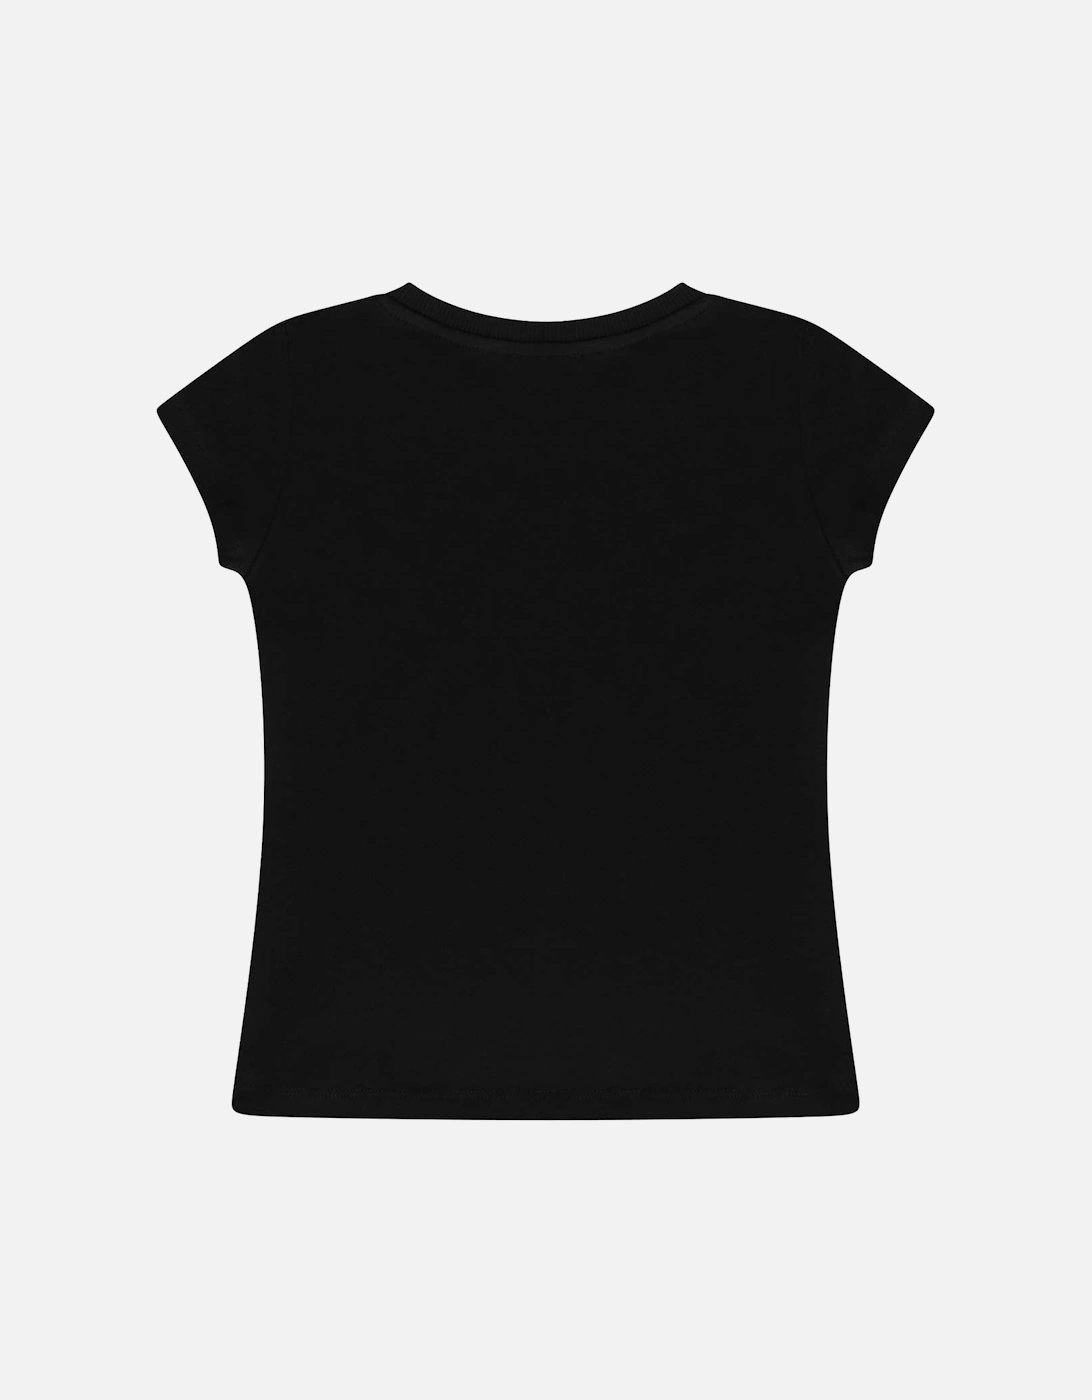 Juniors Toy Applique T-Shirt (Black)